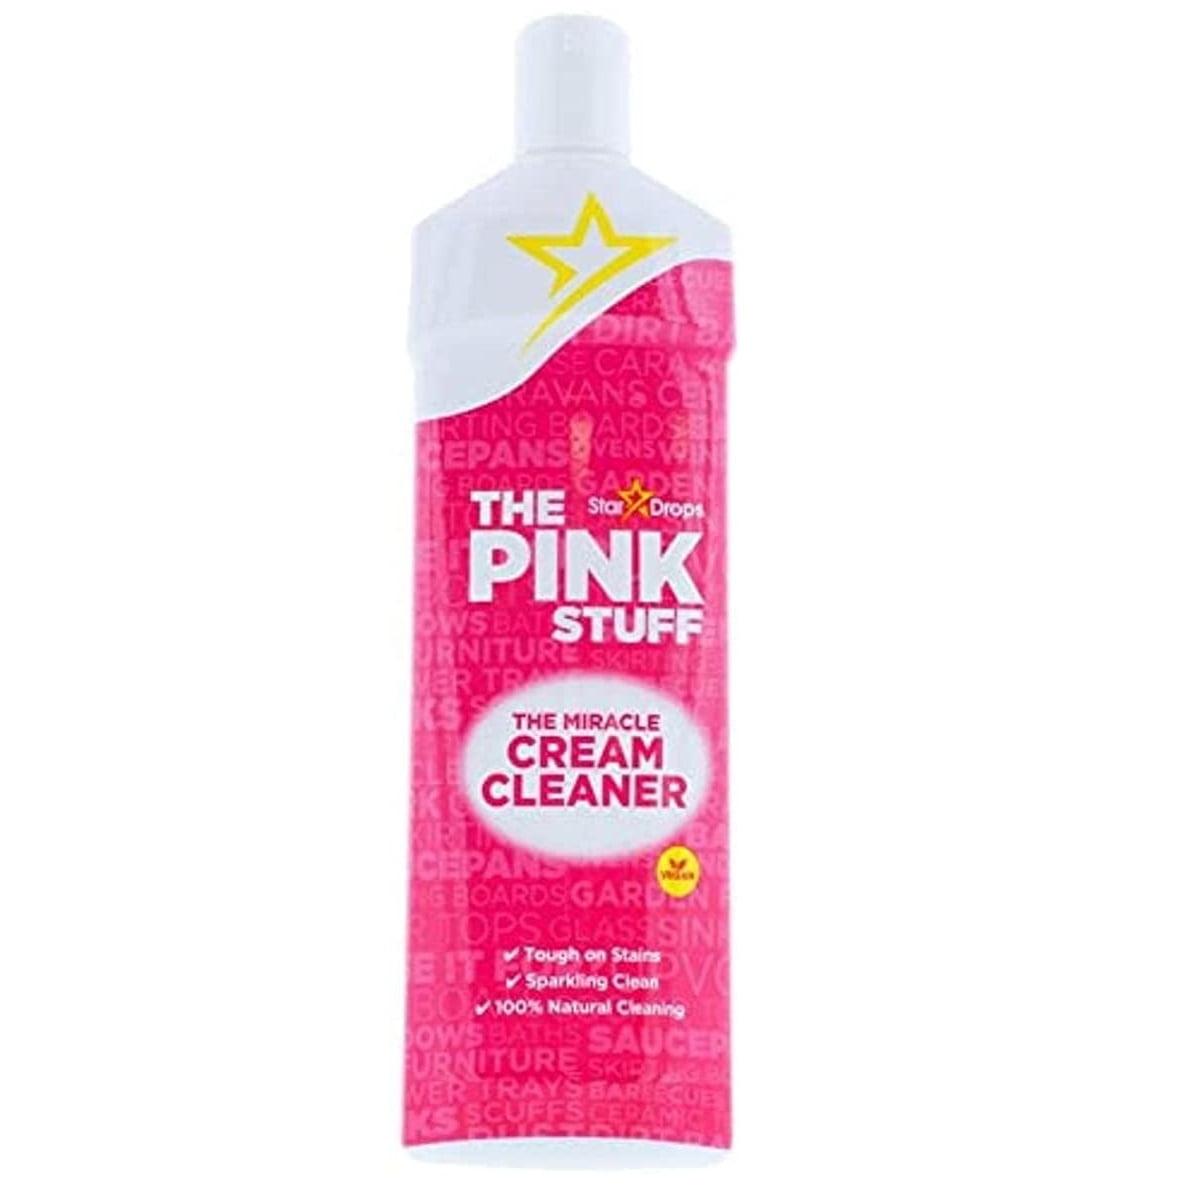 Clean up крем. Miracle Cream розовый. The Pink stuff паста. The Pink stuff.